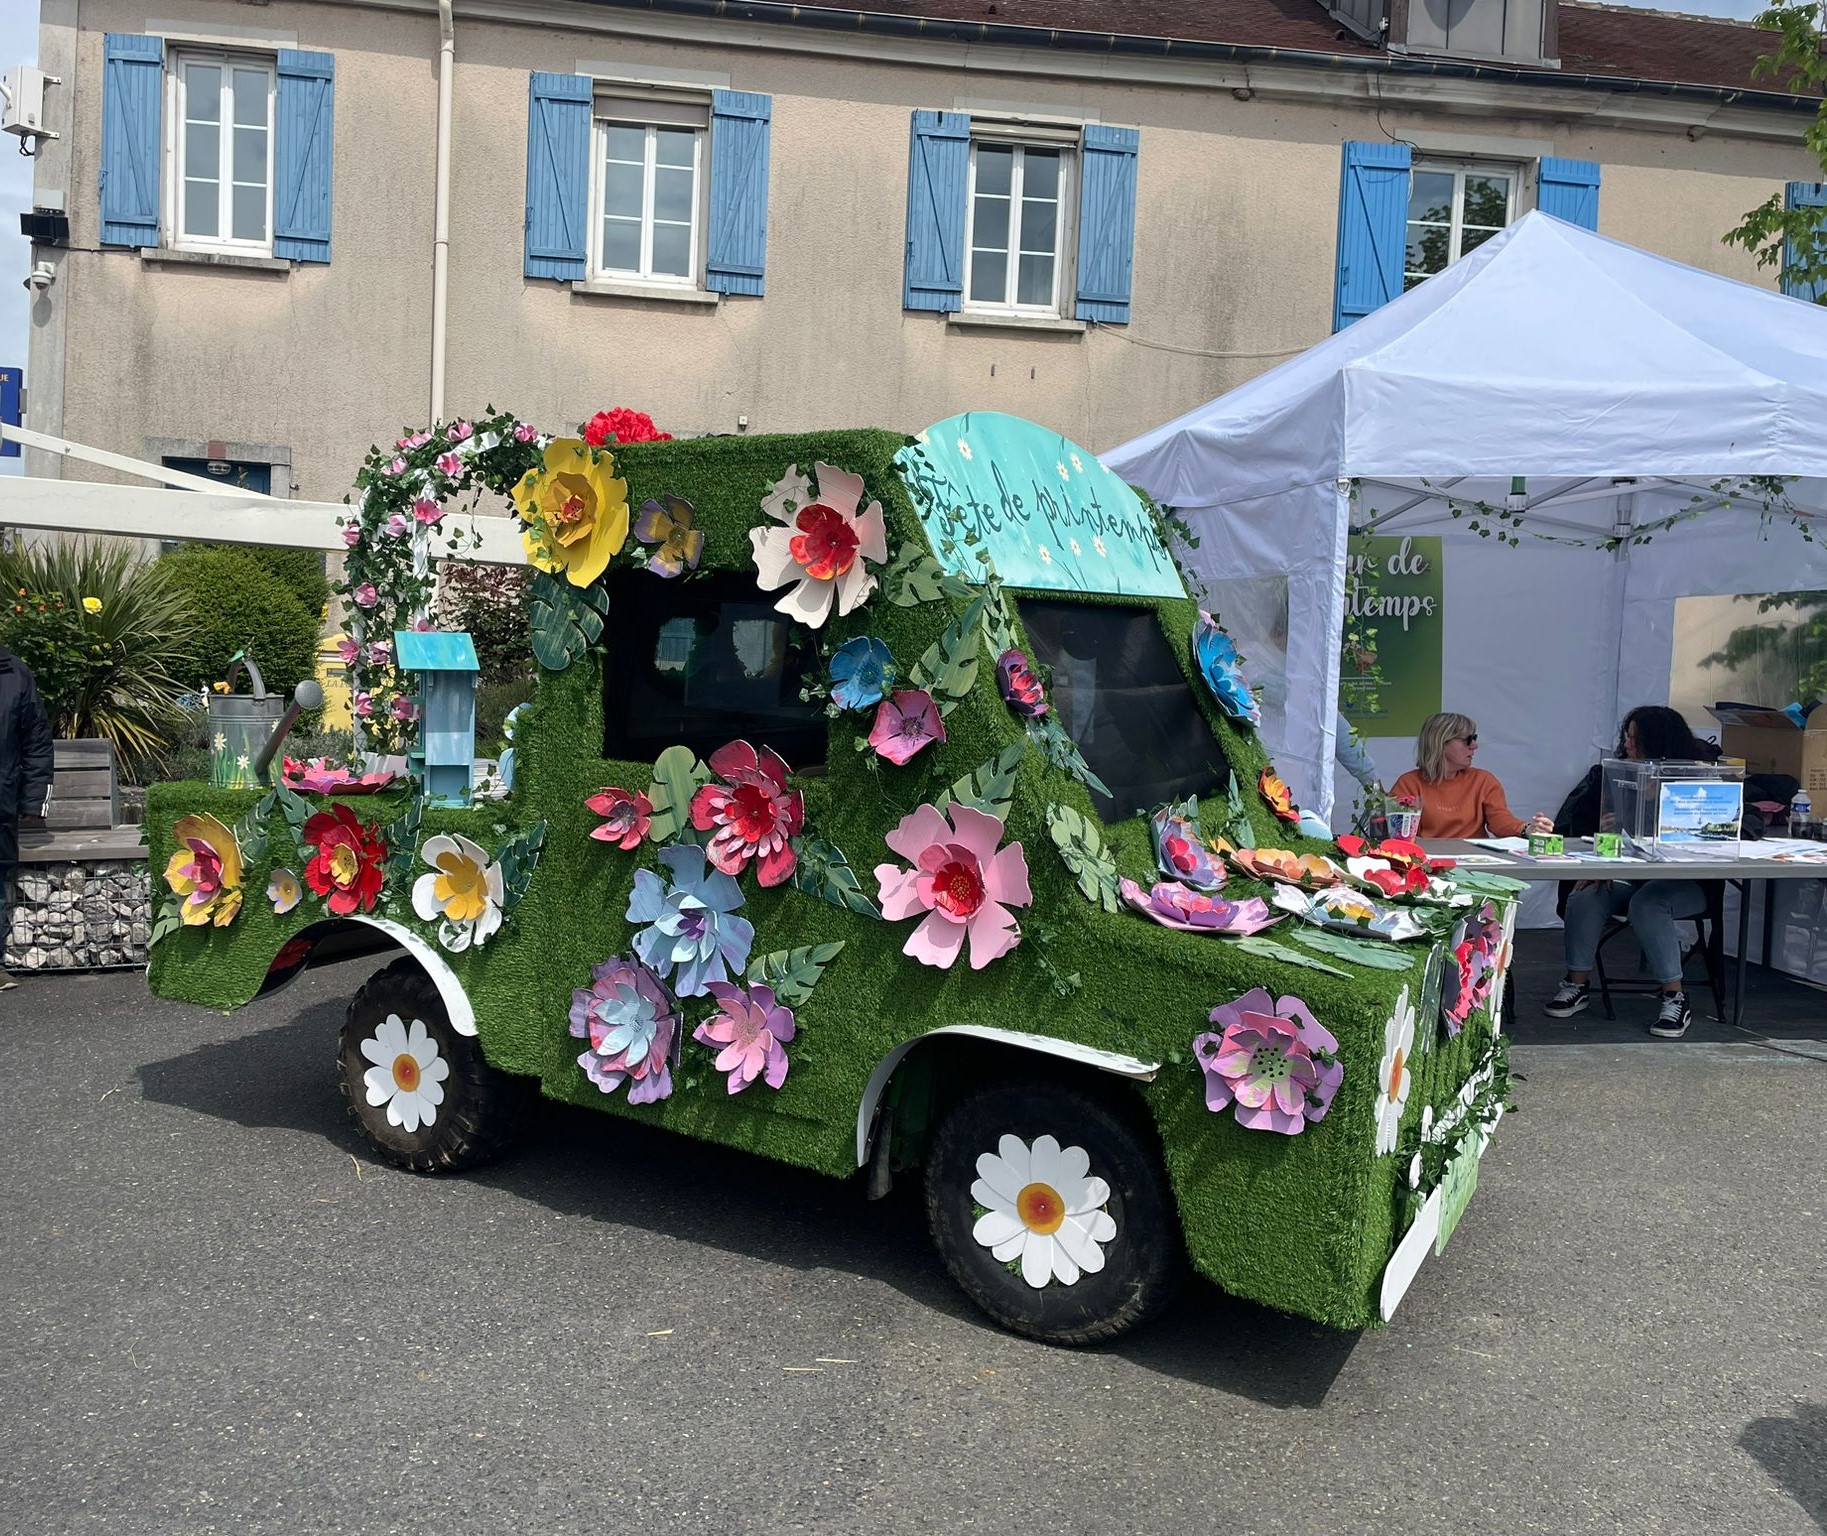 A successful Spring Festival in Roissy-en-France